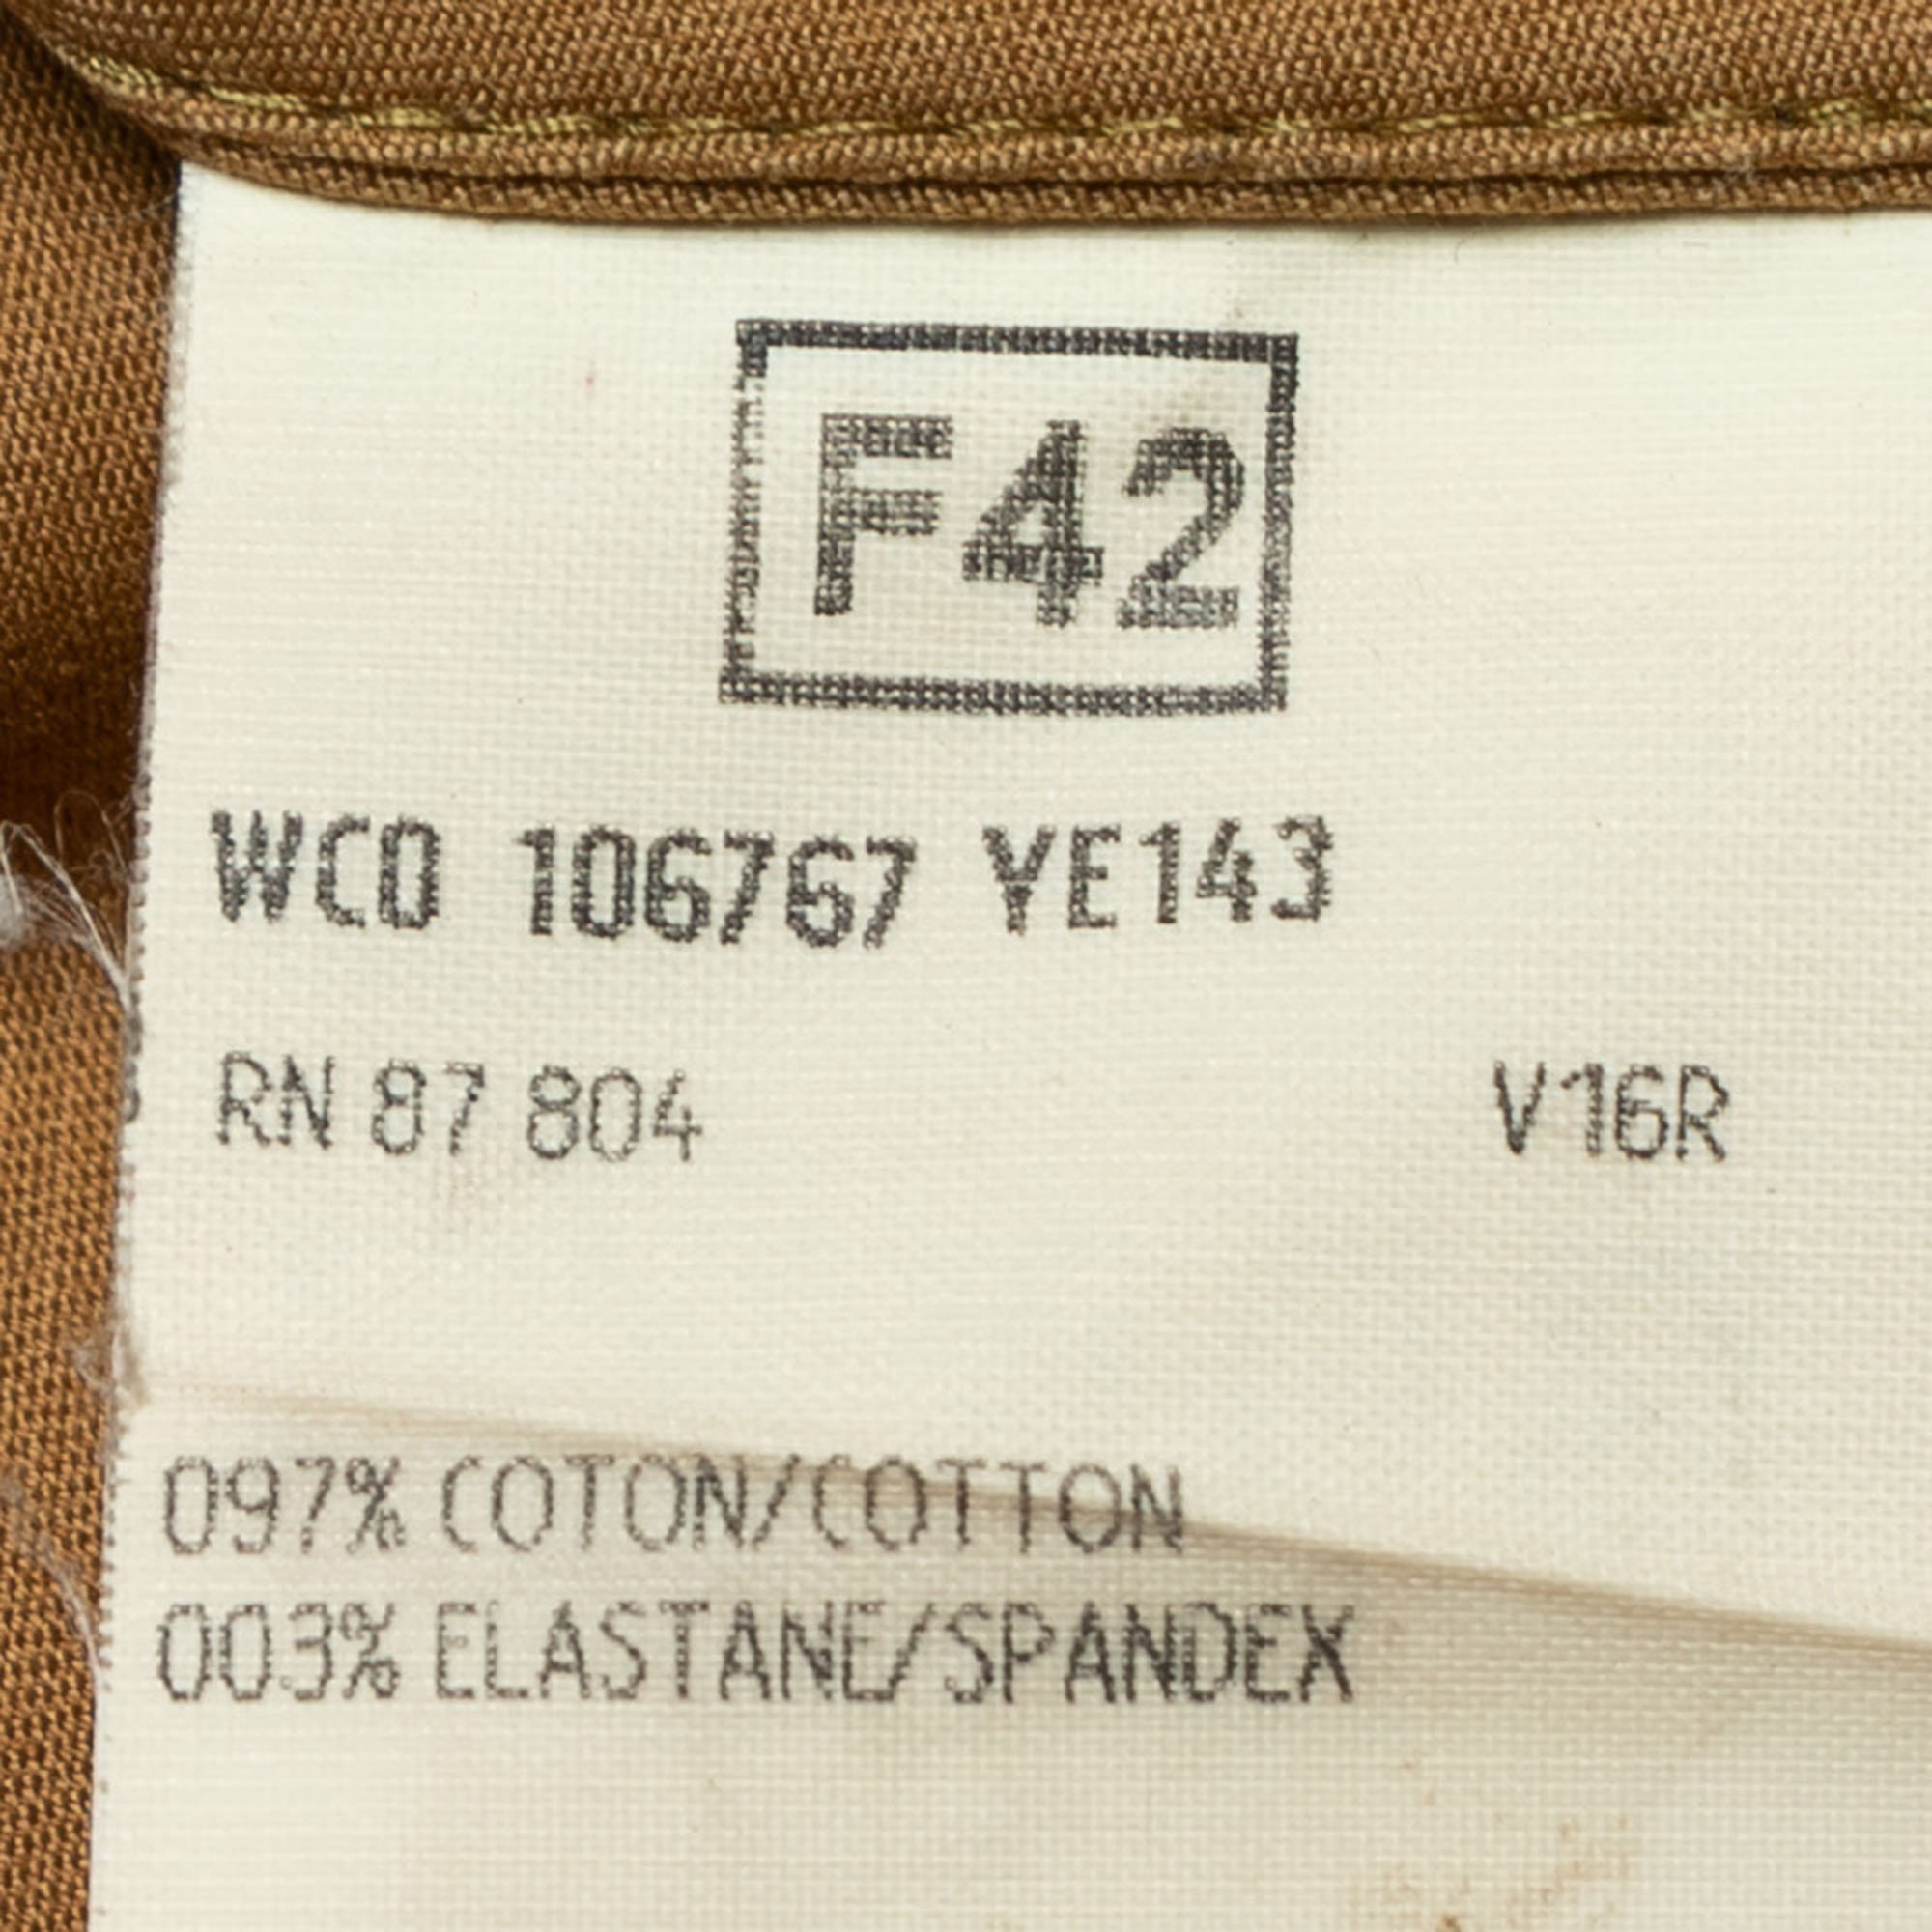 Yves Saint Laurent Tan Brown Cotton Twill Ruffled Zip-Up Jacket L